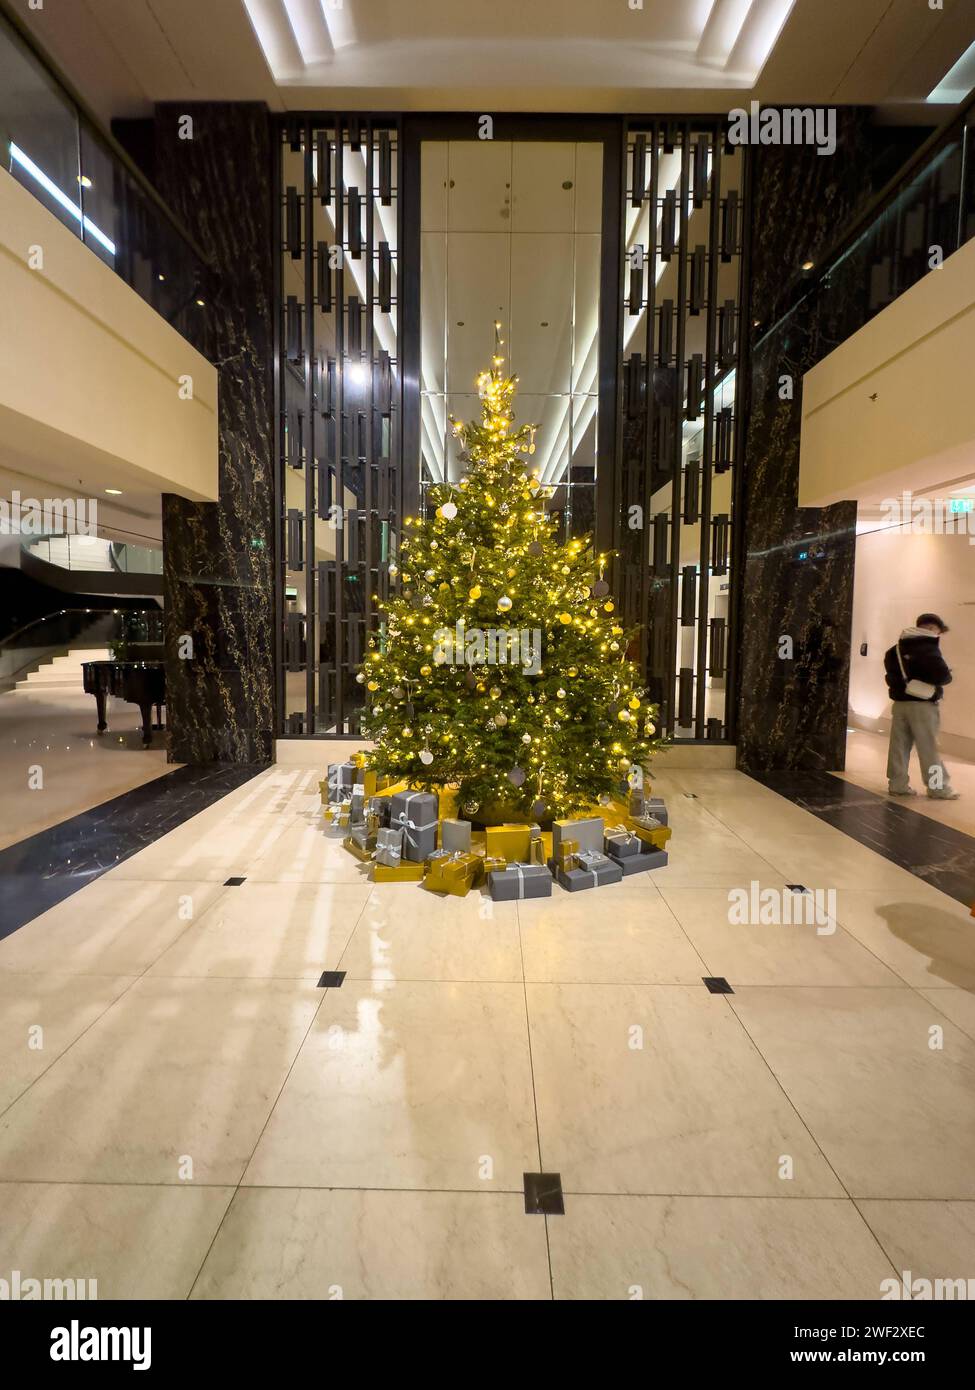 Hotel ein festlich dekorierter Weihnachtsbaum steht im Foyer eines *** un albero di Natale decorato festosamente si trova nell'atrio di un hotel Foto Stock